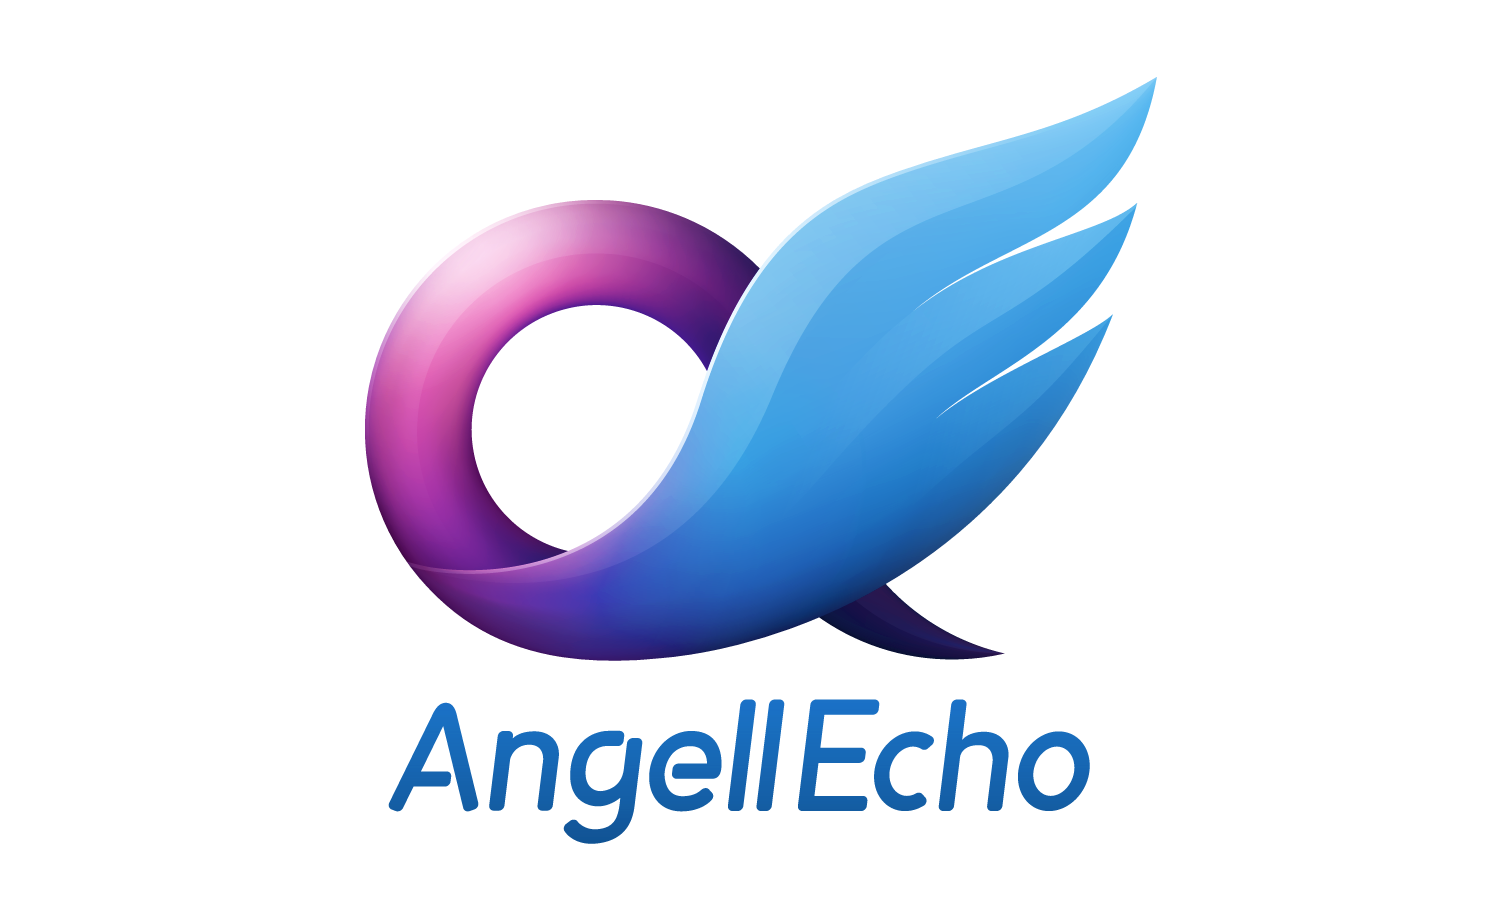 Angell_echo